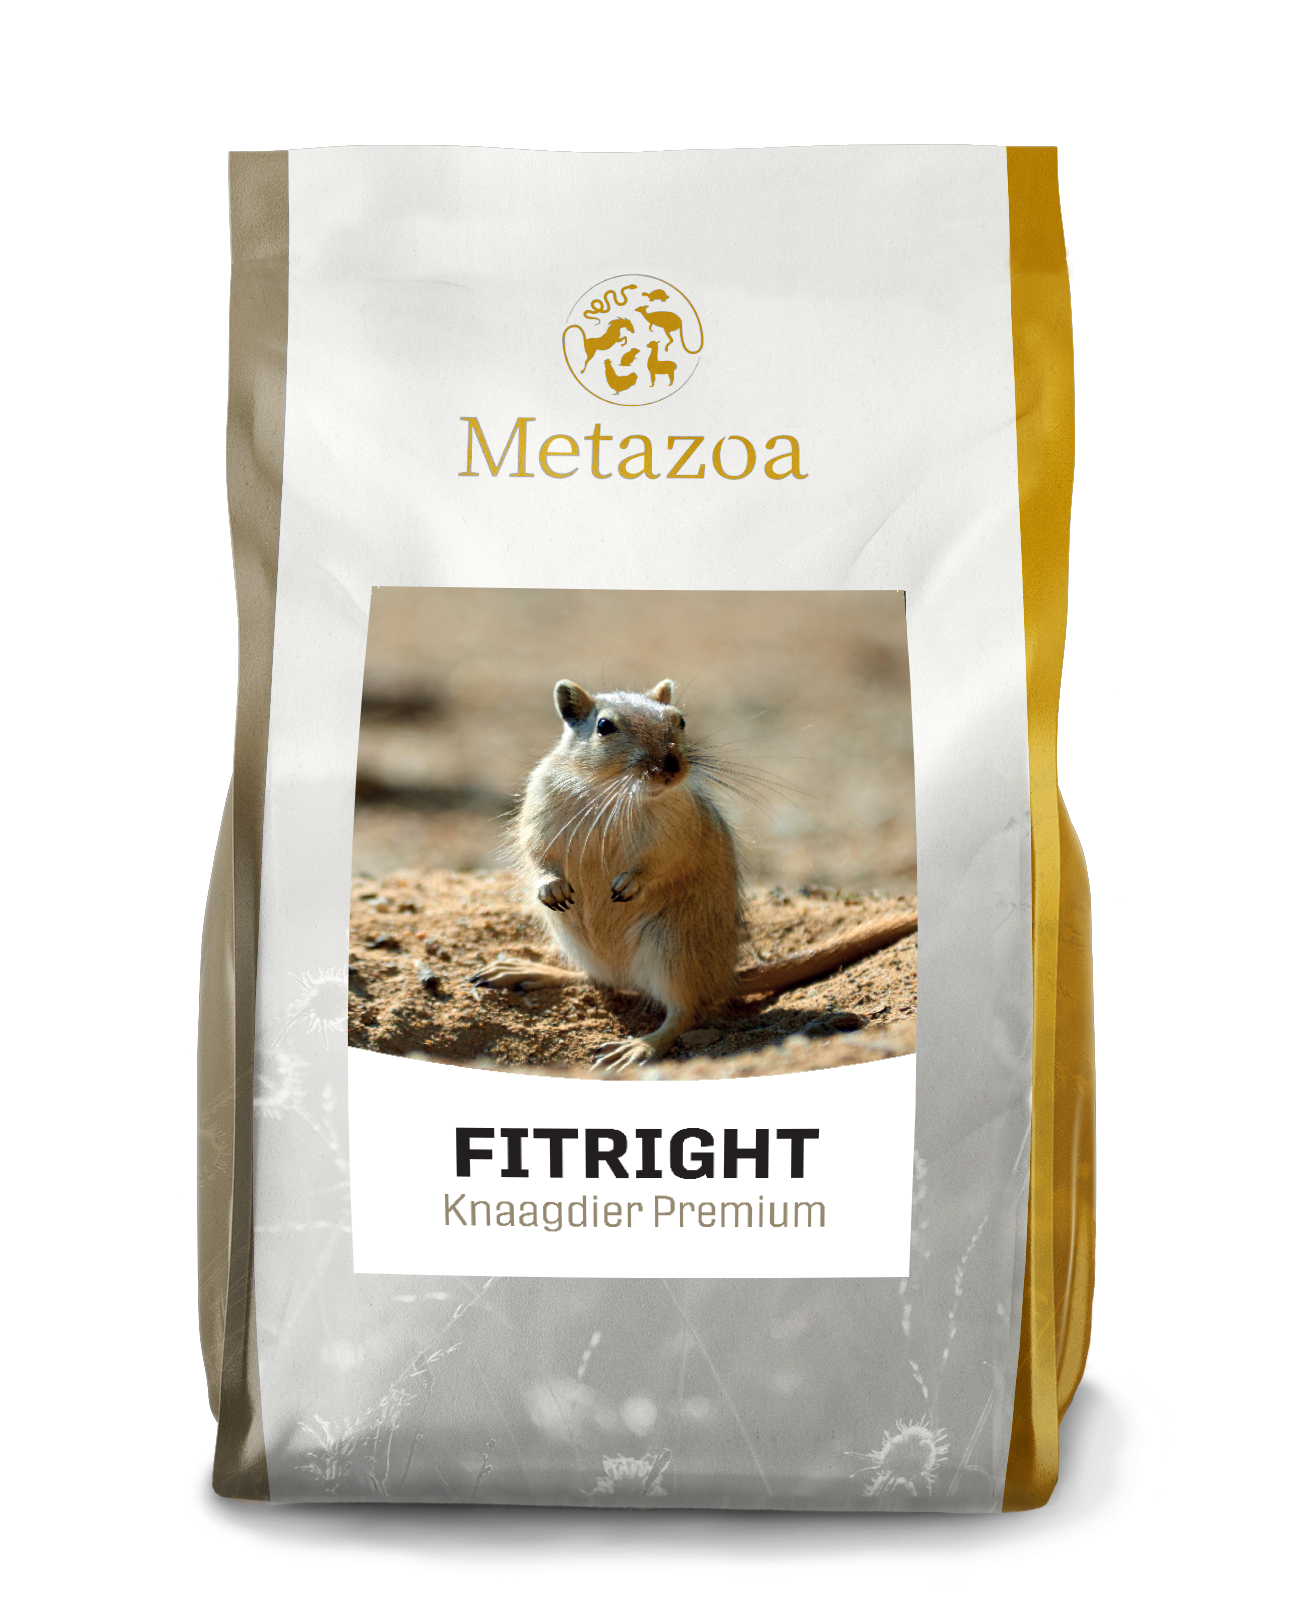 Download Metazoa Verpakking Exotic Fitright Knaagdier Premium 4 kg EAN 4260176355380